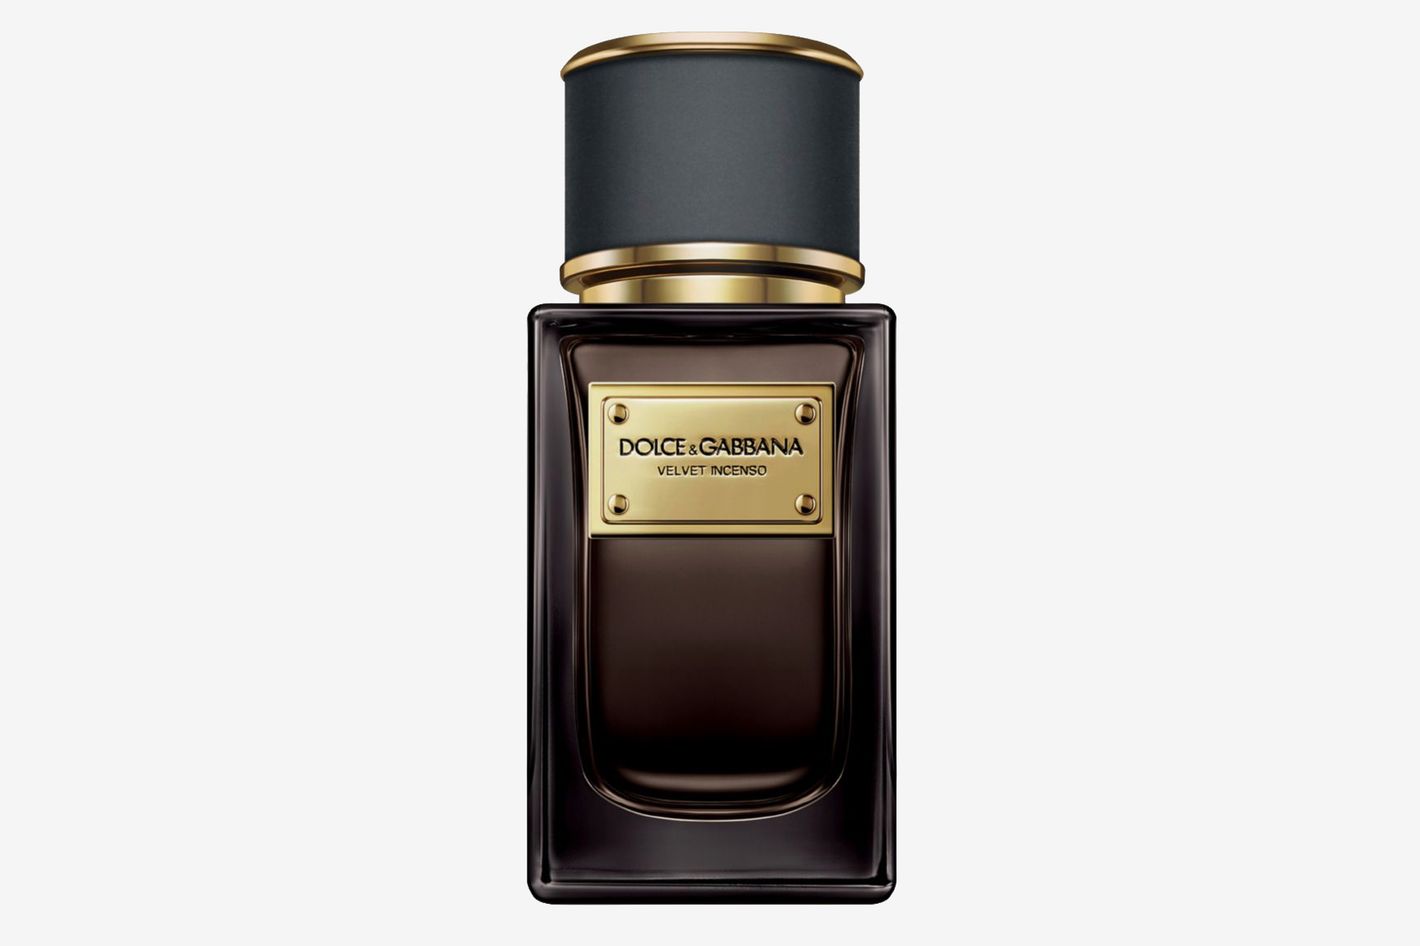 Dolce & Gabbana Velvet Vanity Case and 2 Perfumes